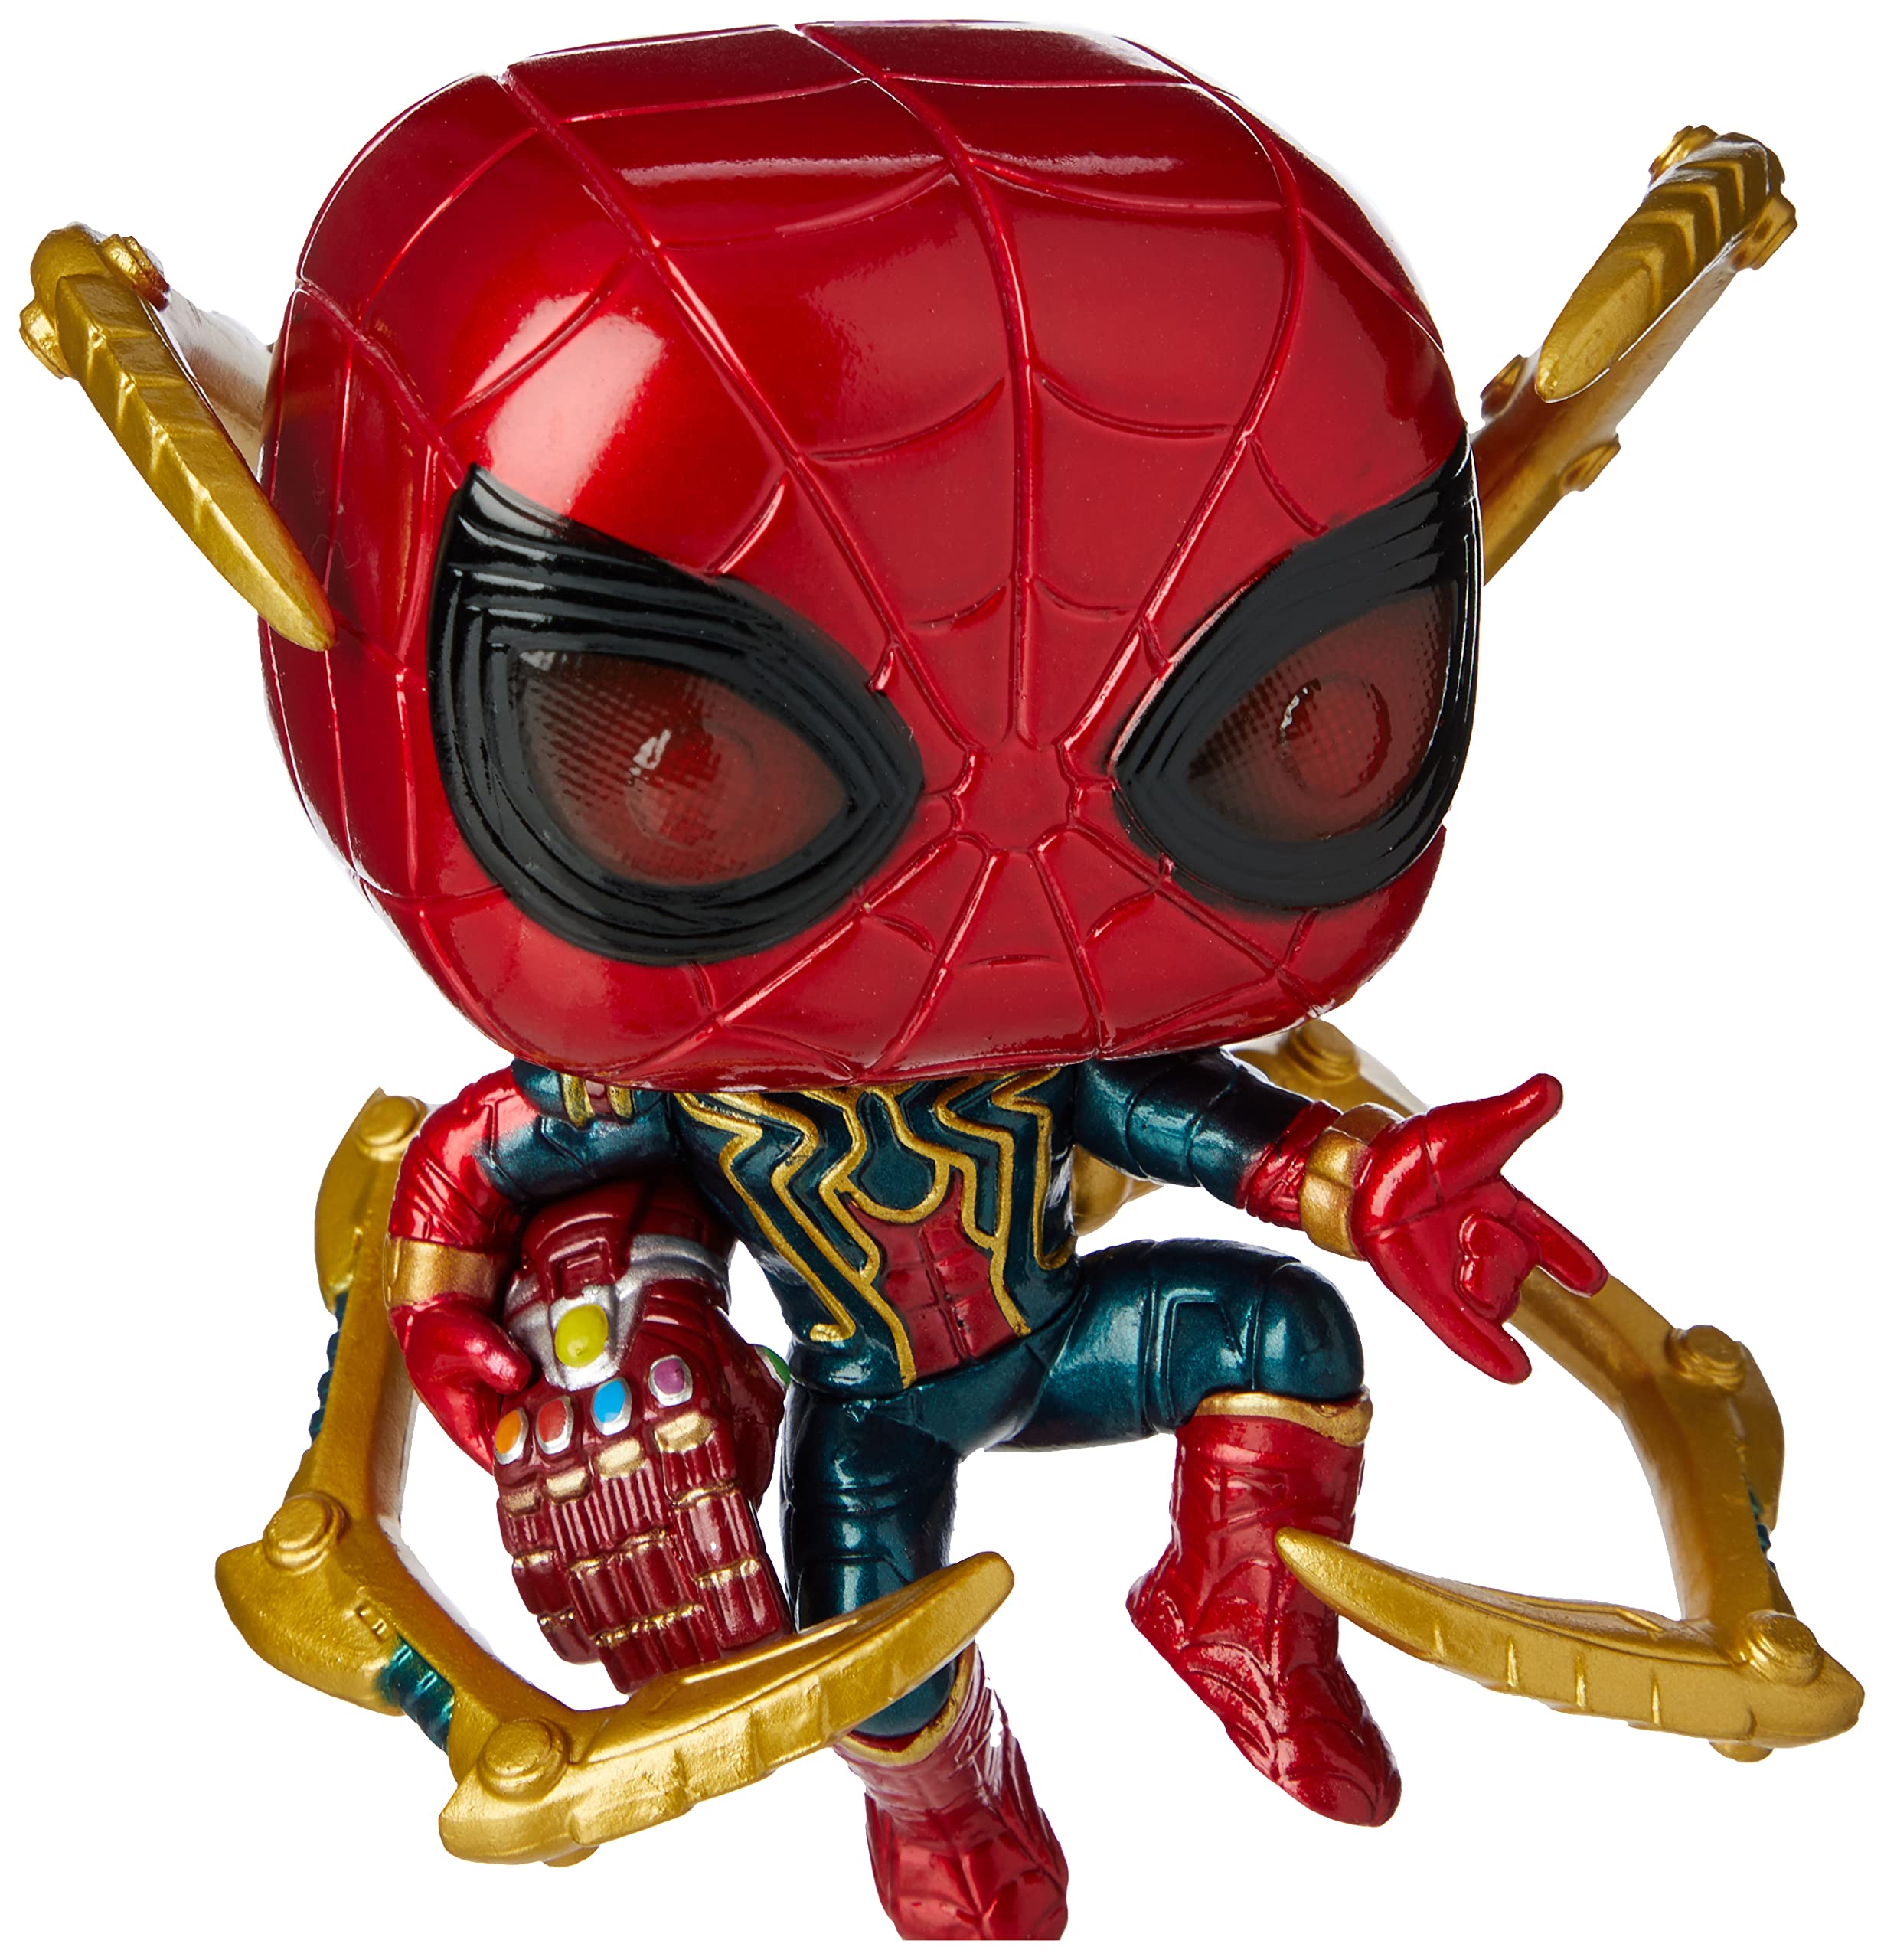 Funko Pop! Marvel: Avengers Endgame - Iron Spider with Nano Gauntlet, Multicolor (45138)